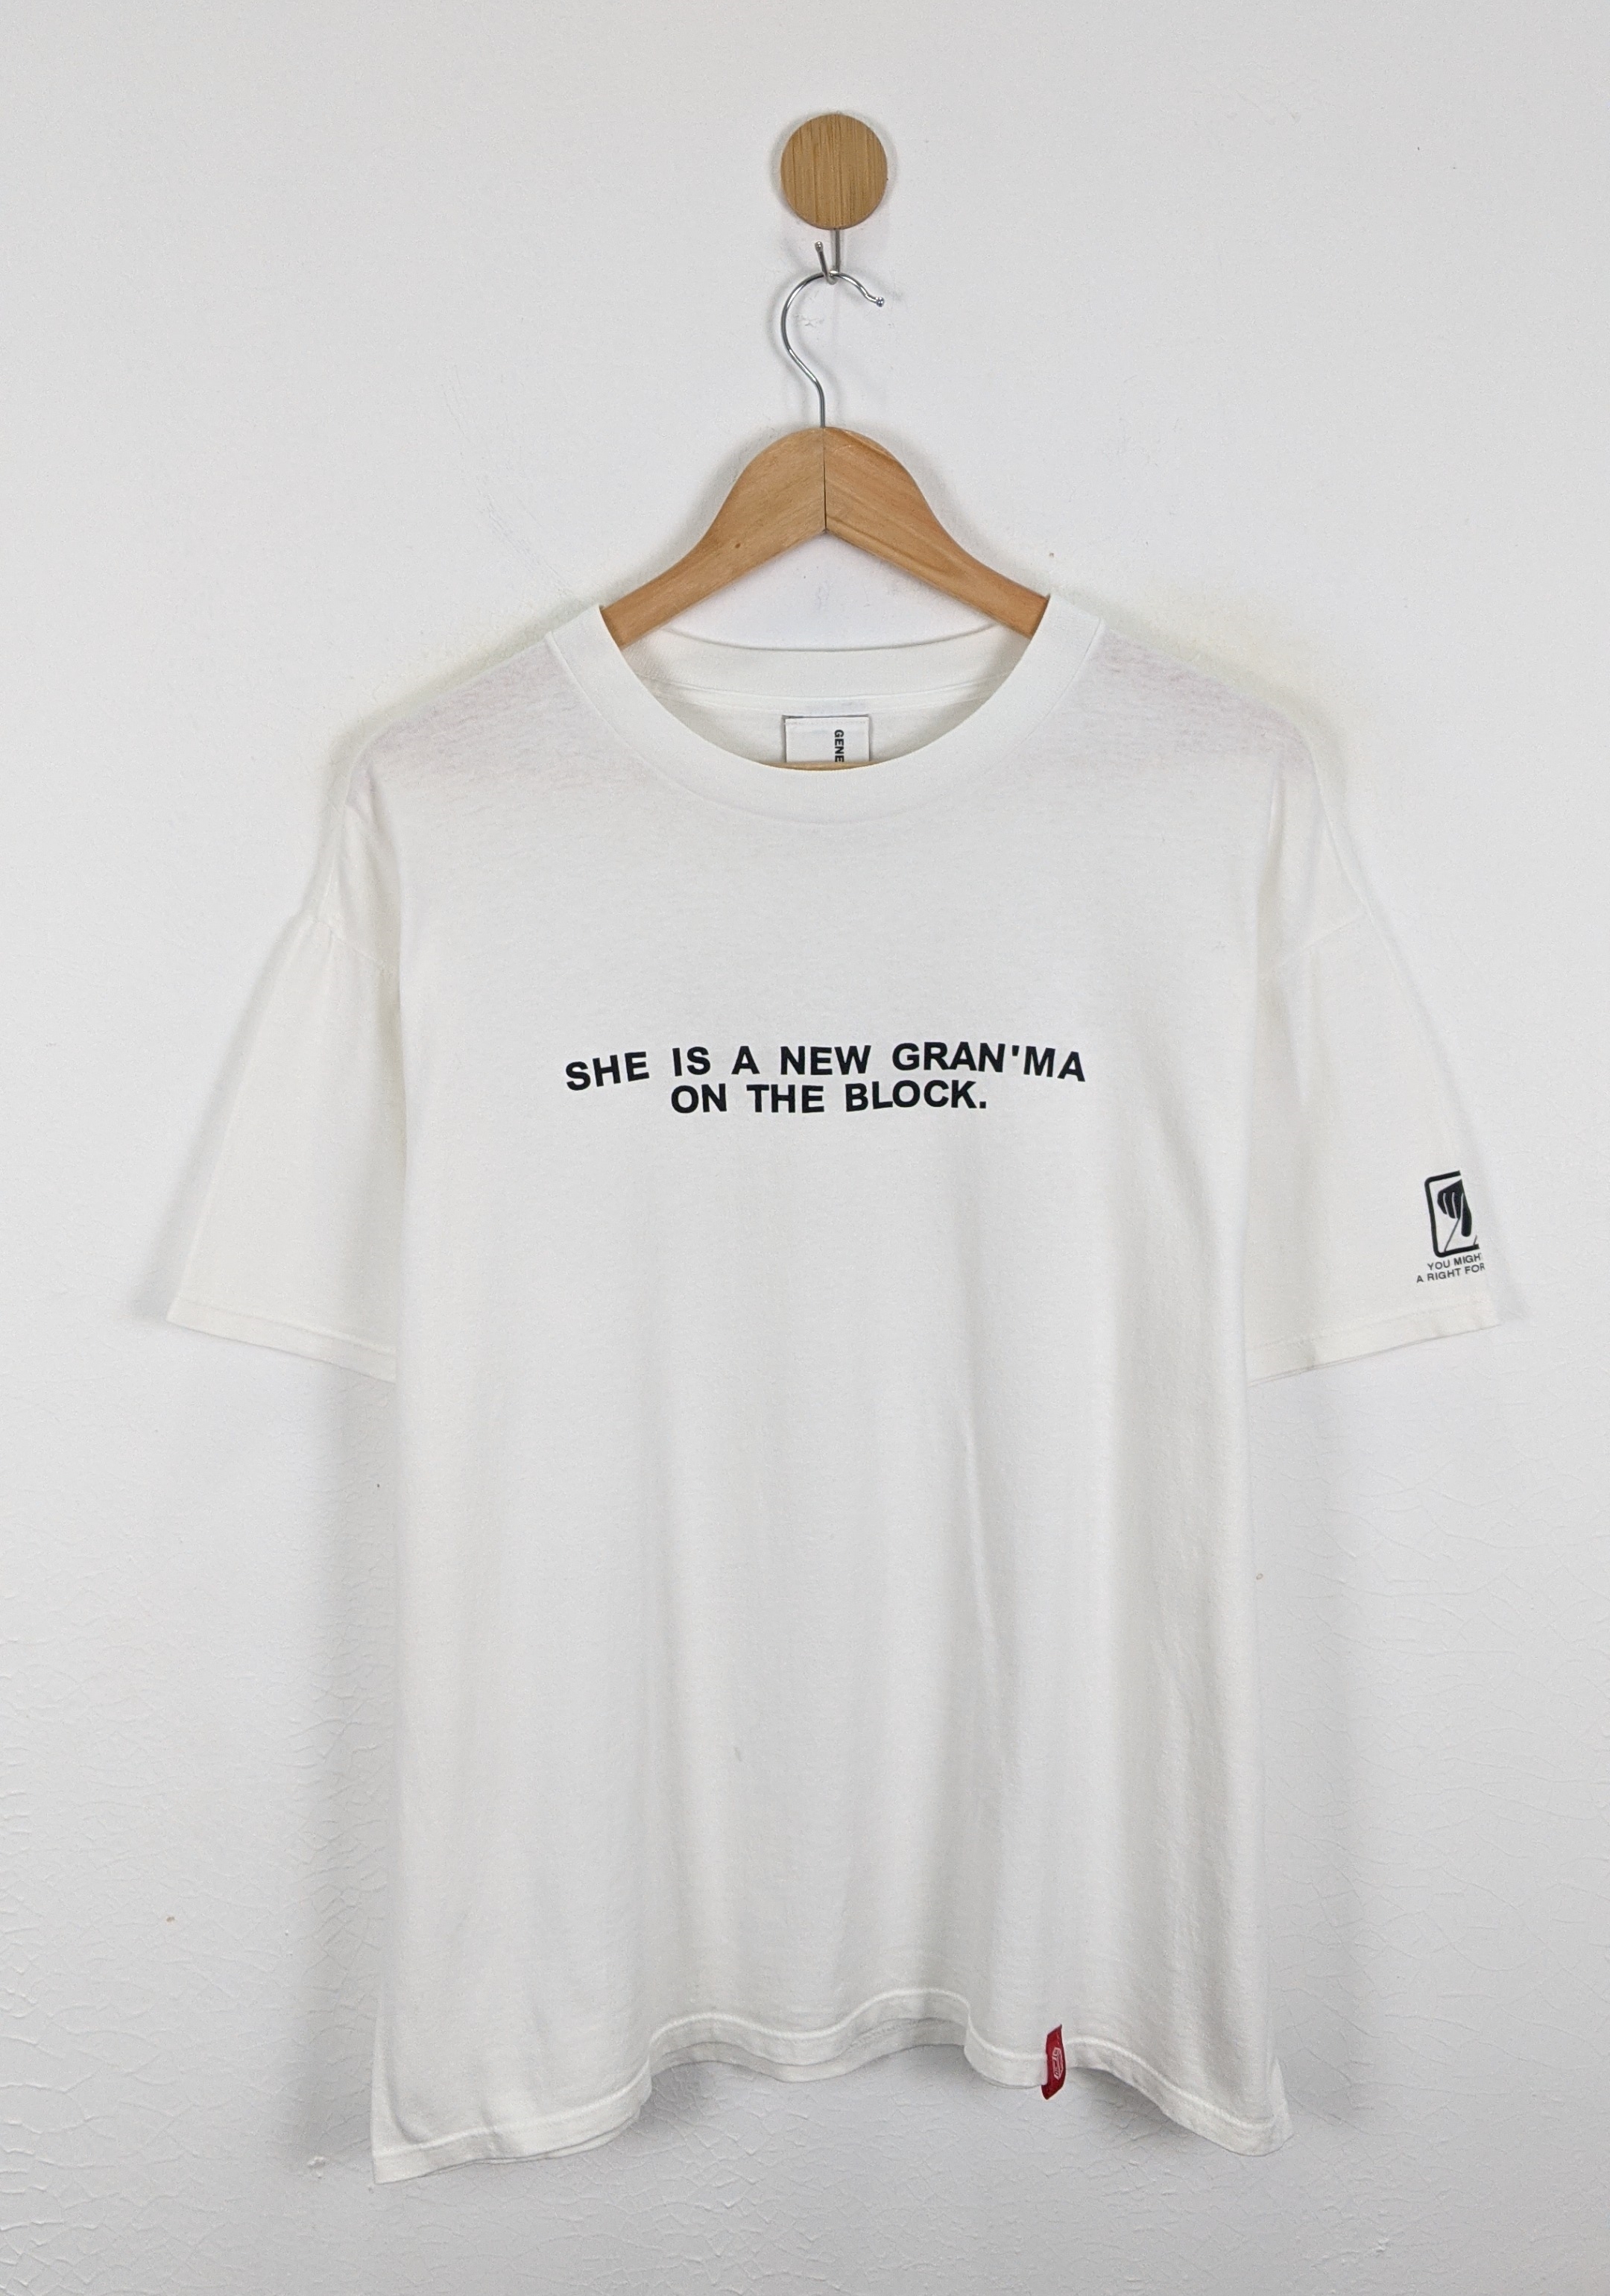 General Research 1998 New Granma shirt - 1